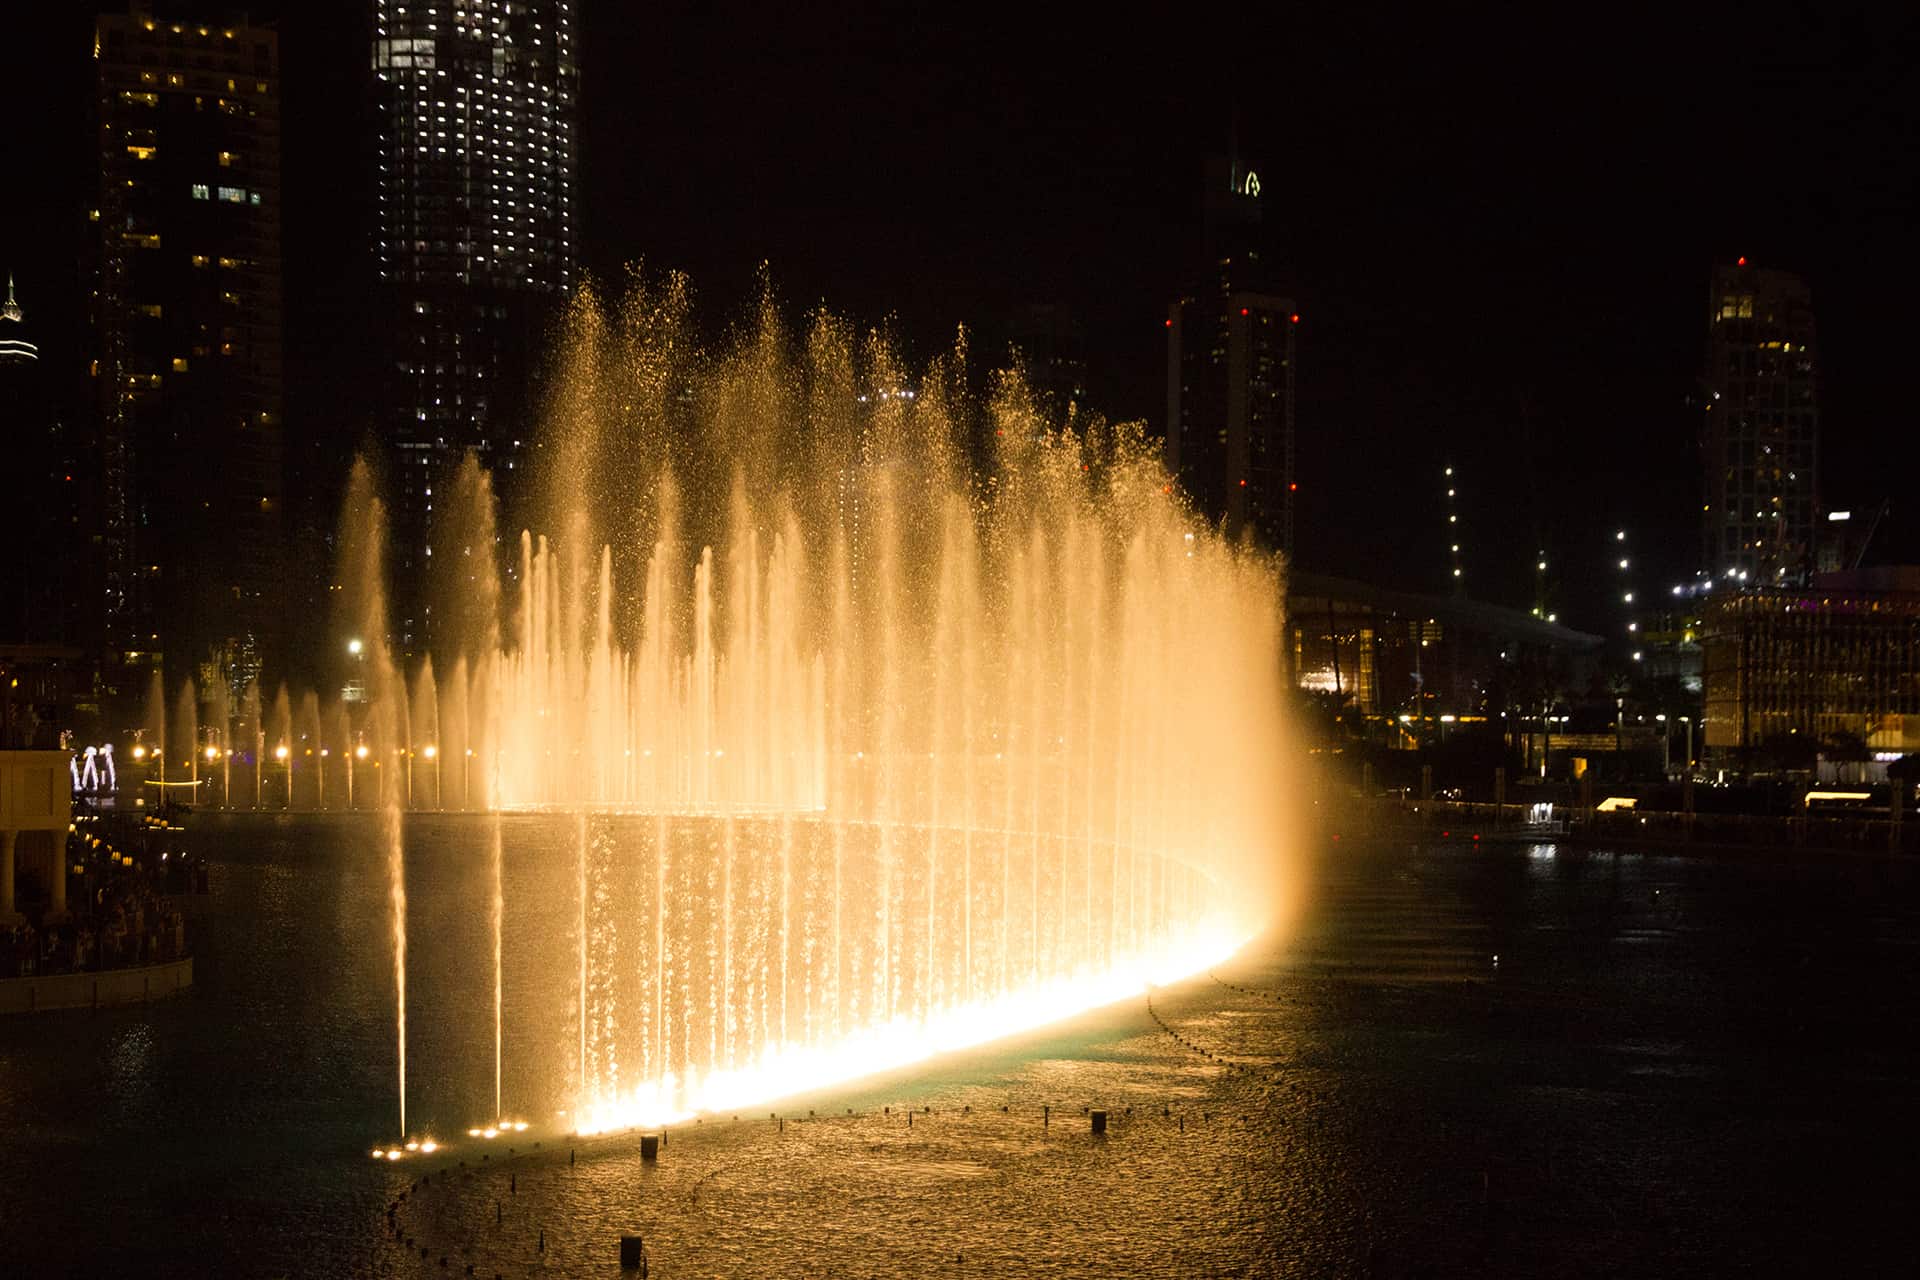 burj khalifa water show